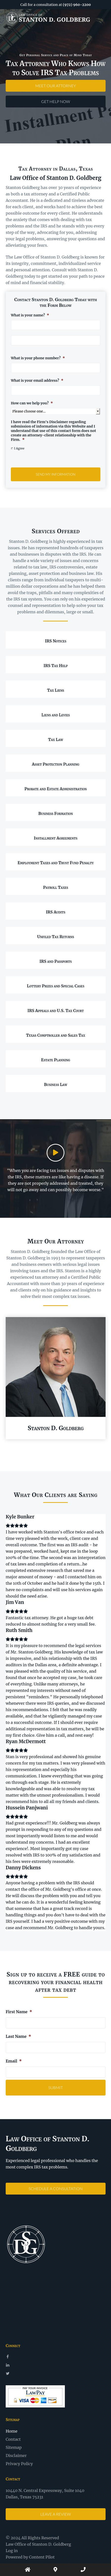 Law Office of Stanton D. Goldberg - Dallas TX Lawyers